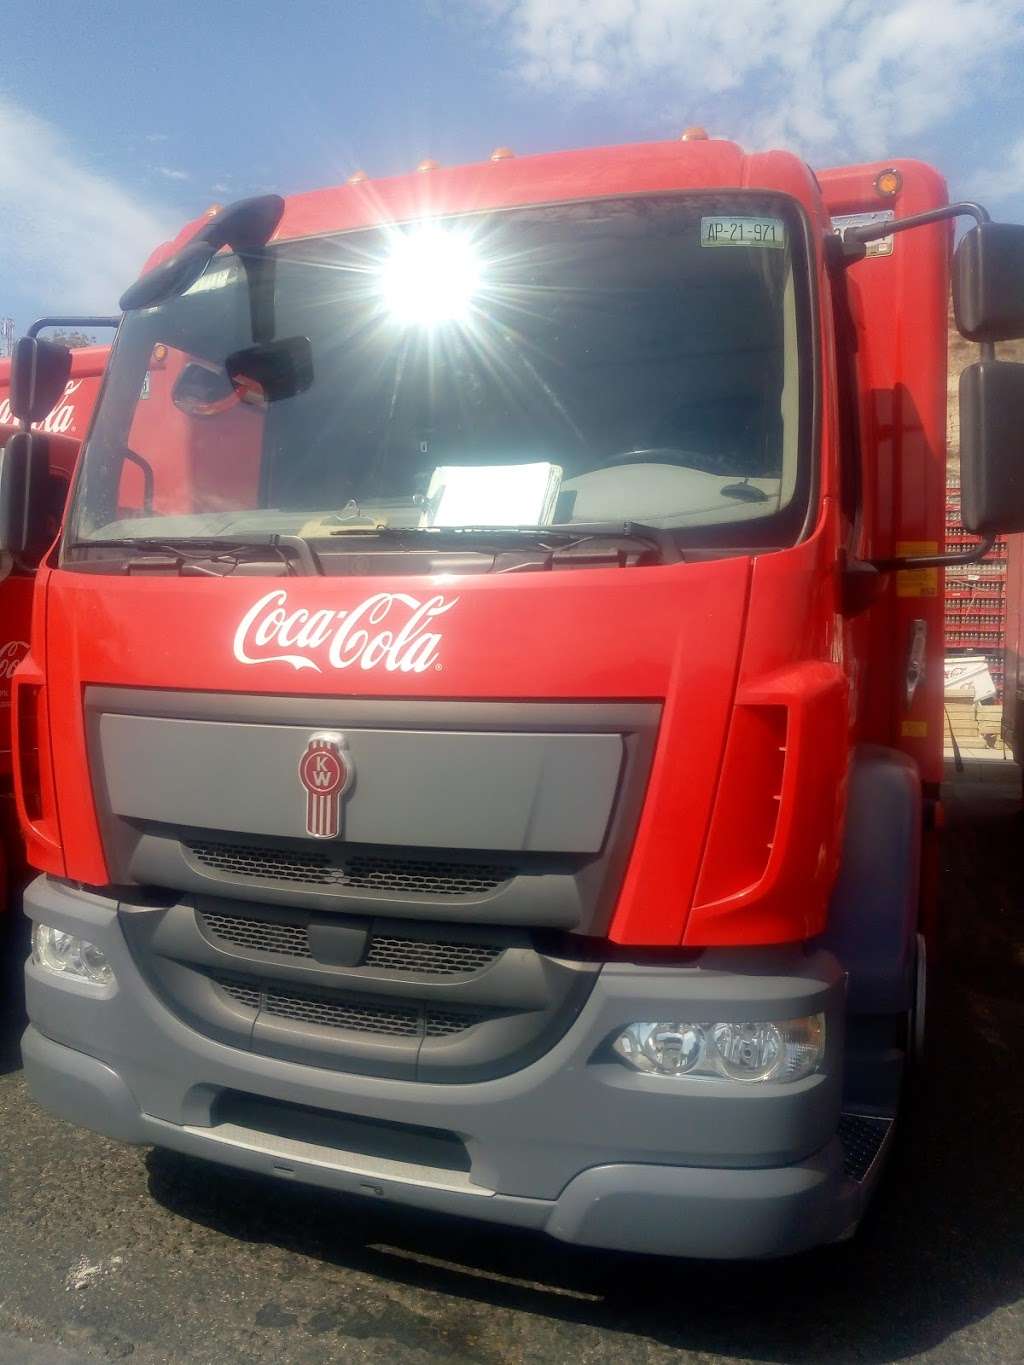 Coca Cola Pacific Cedis | Insurgentes 22, Internacional, 22640 Tijuana, B.C., Mexico | Phone: 6276700